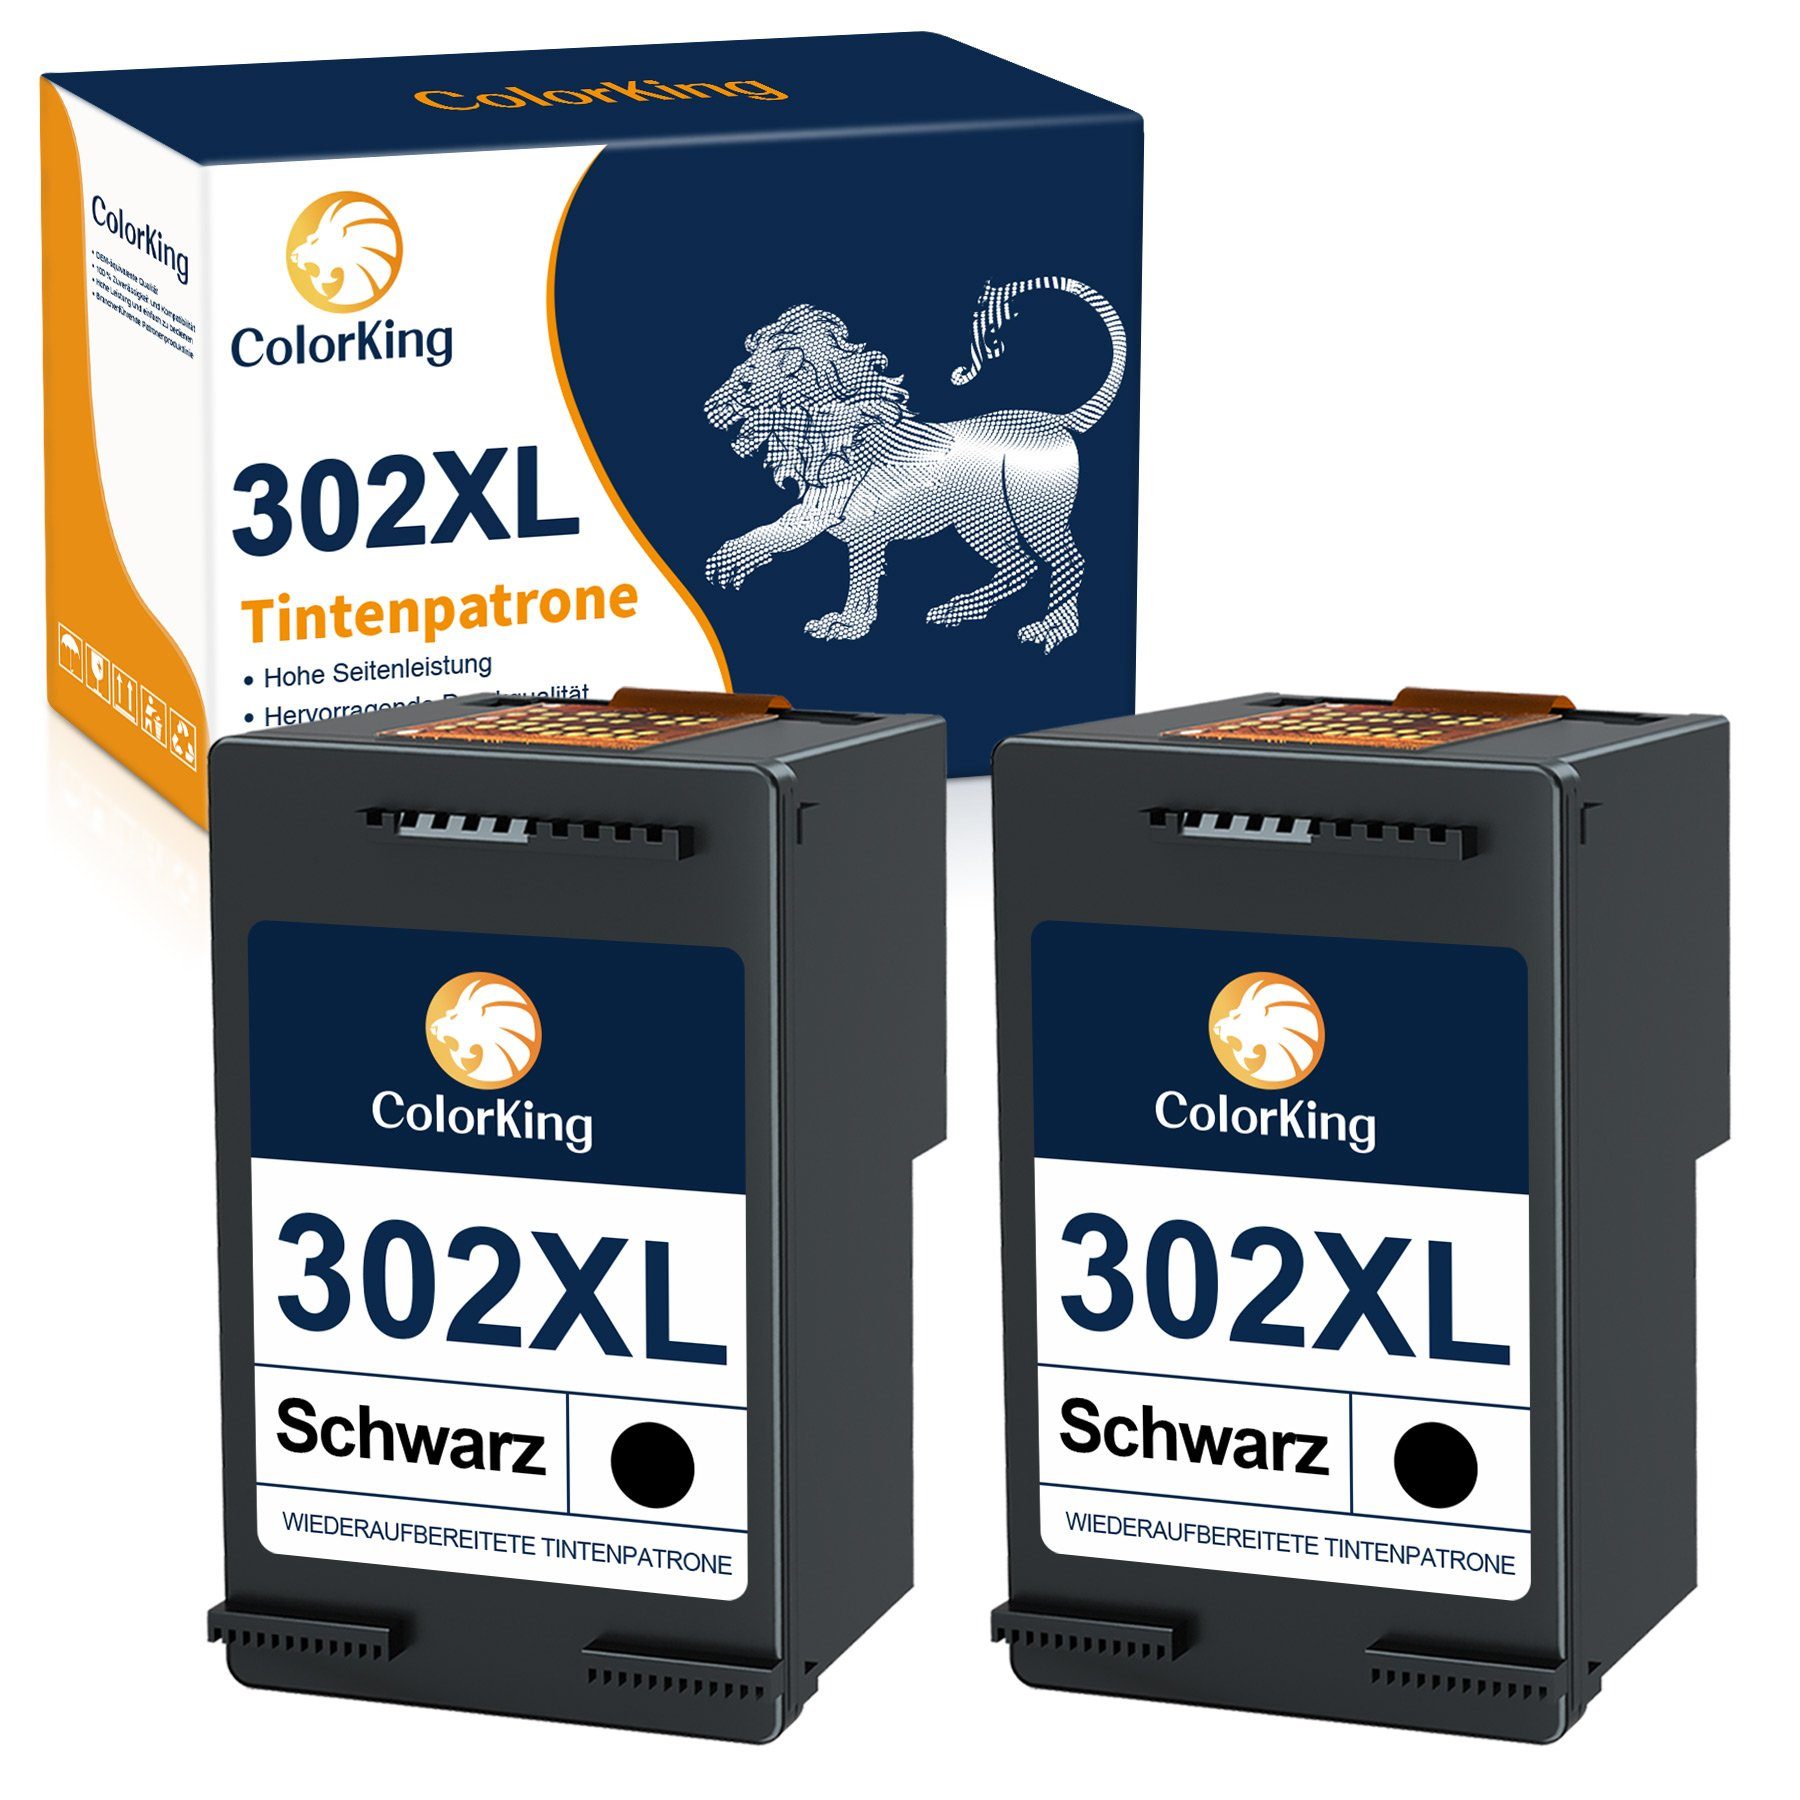 ColorKing 302 XL 302XL Schwarz Black für HP Officejet 3830 Deskjet 1110 Tintenpatrone (Envy 4520 4522) 2 Schwarz